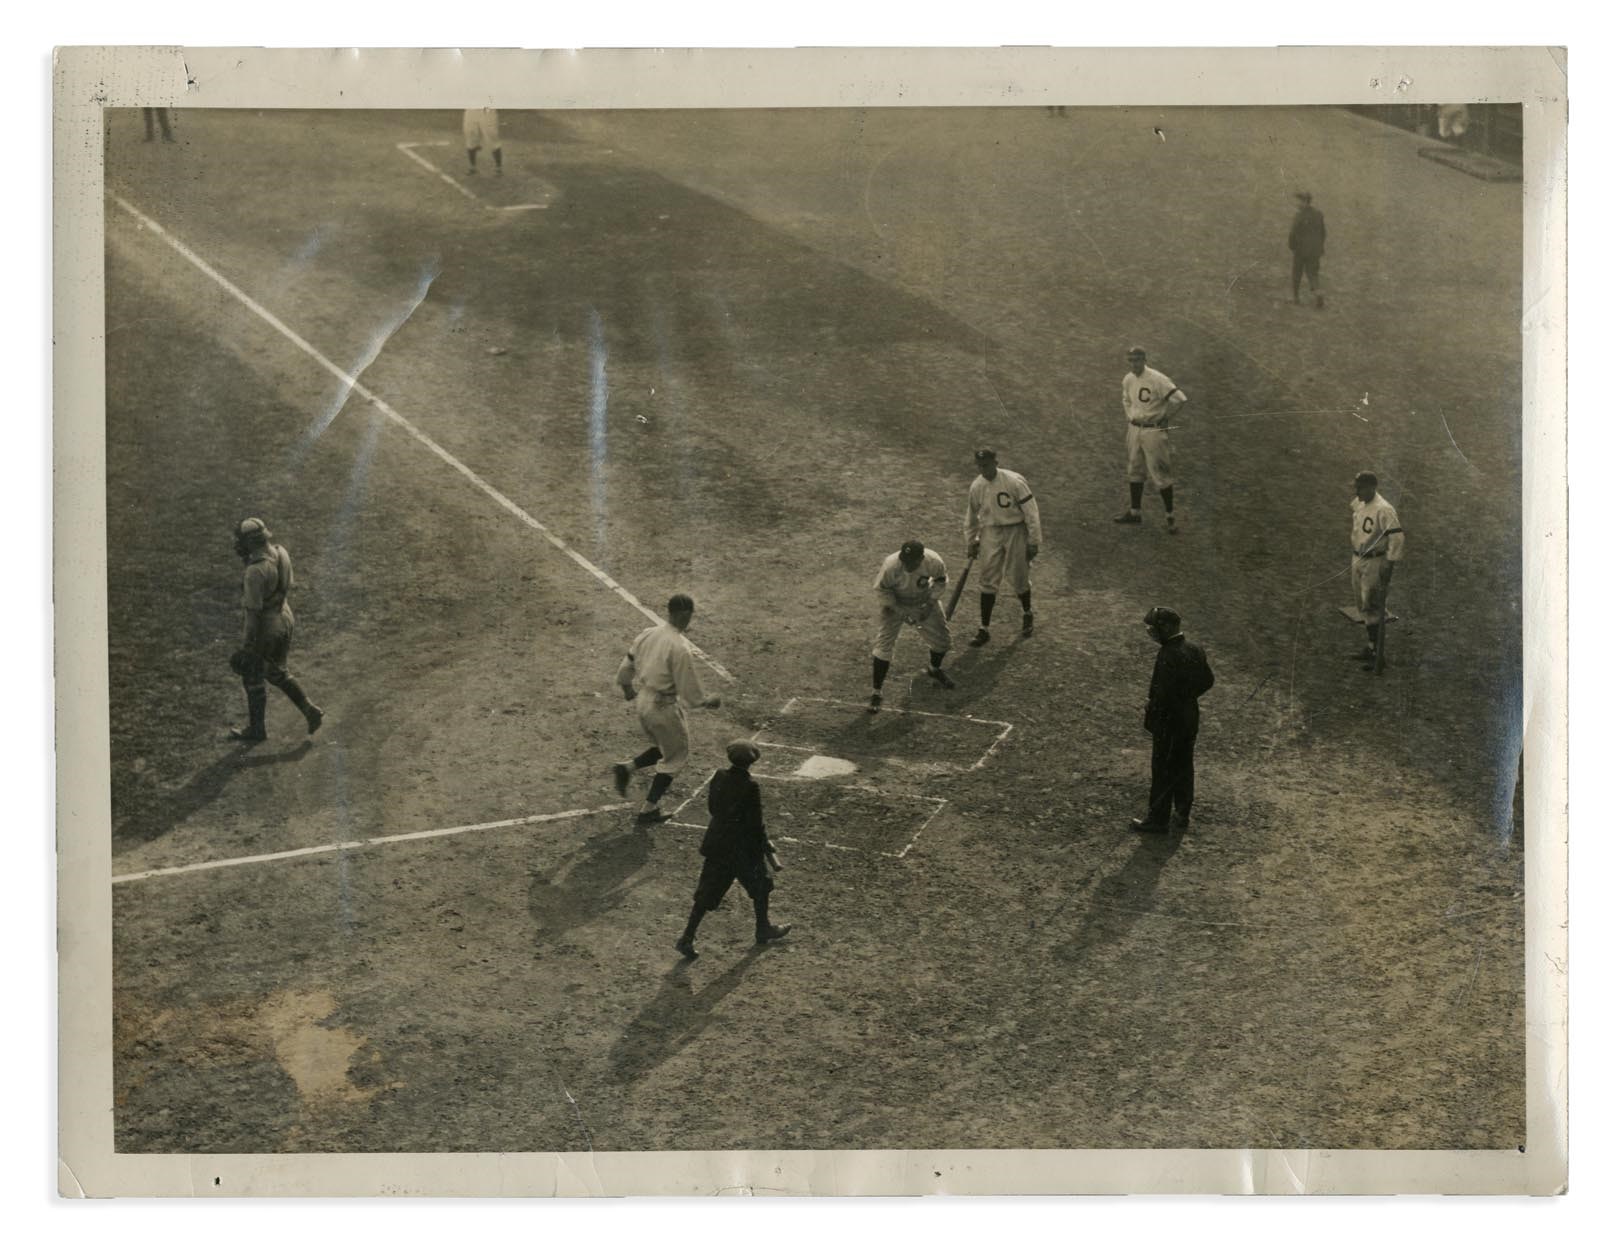 Cleveland Indians - 1920 World Series Elmer Smith Grand Slam Home Run Photograph from Baseball Magazine